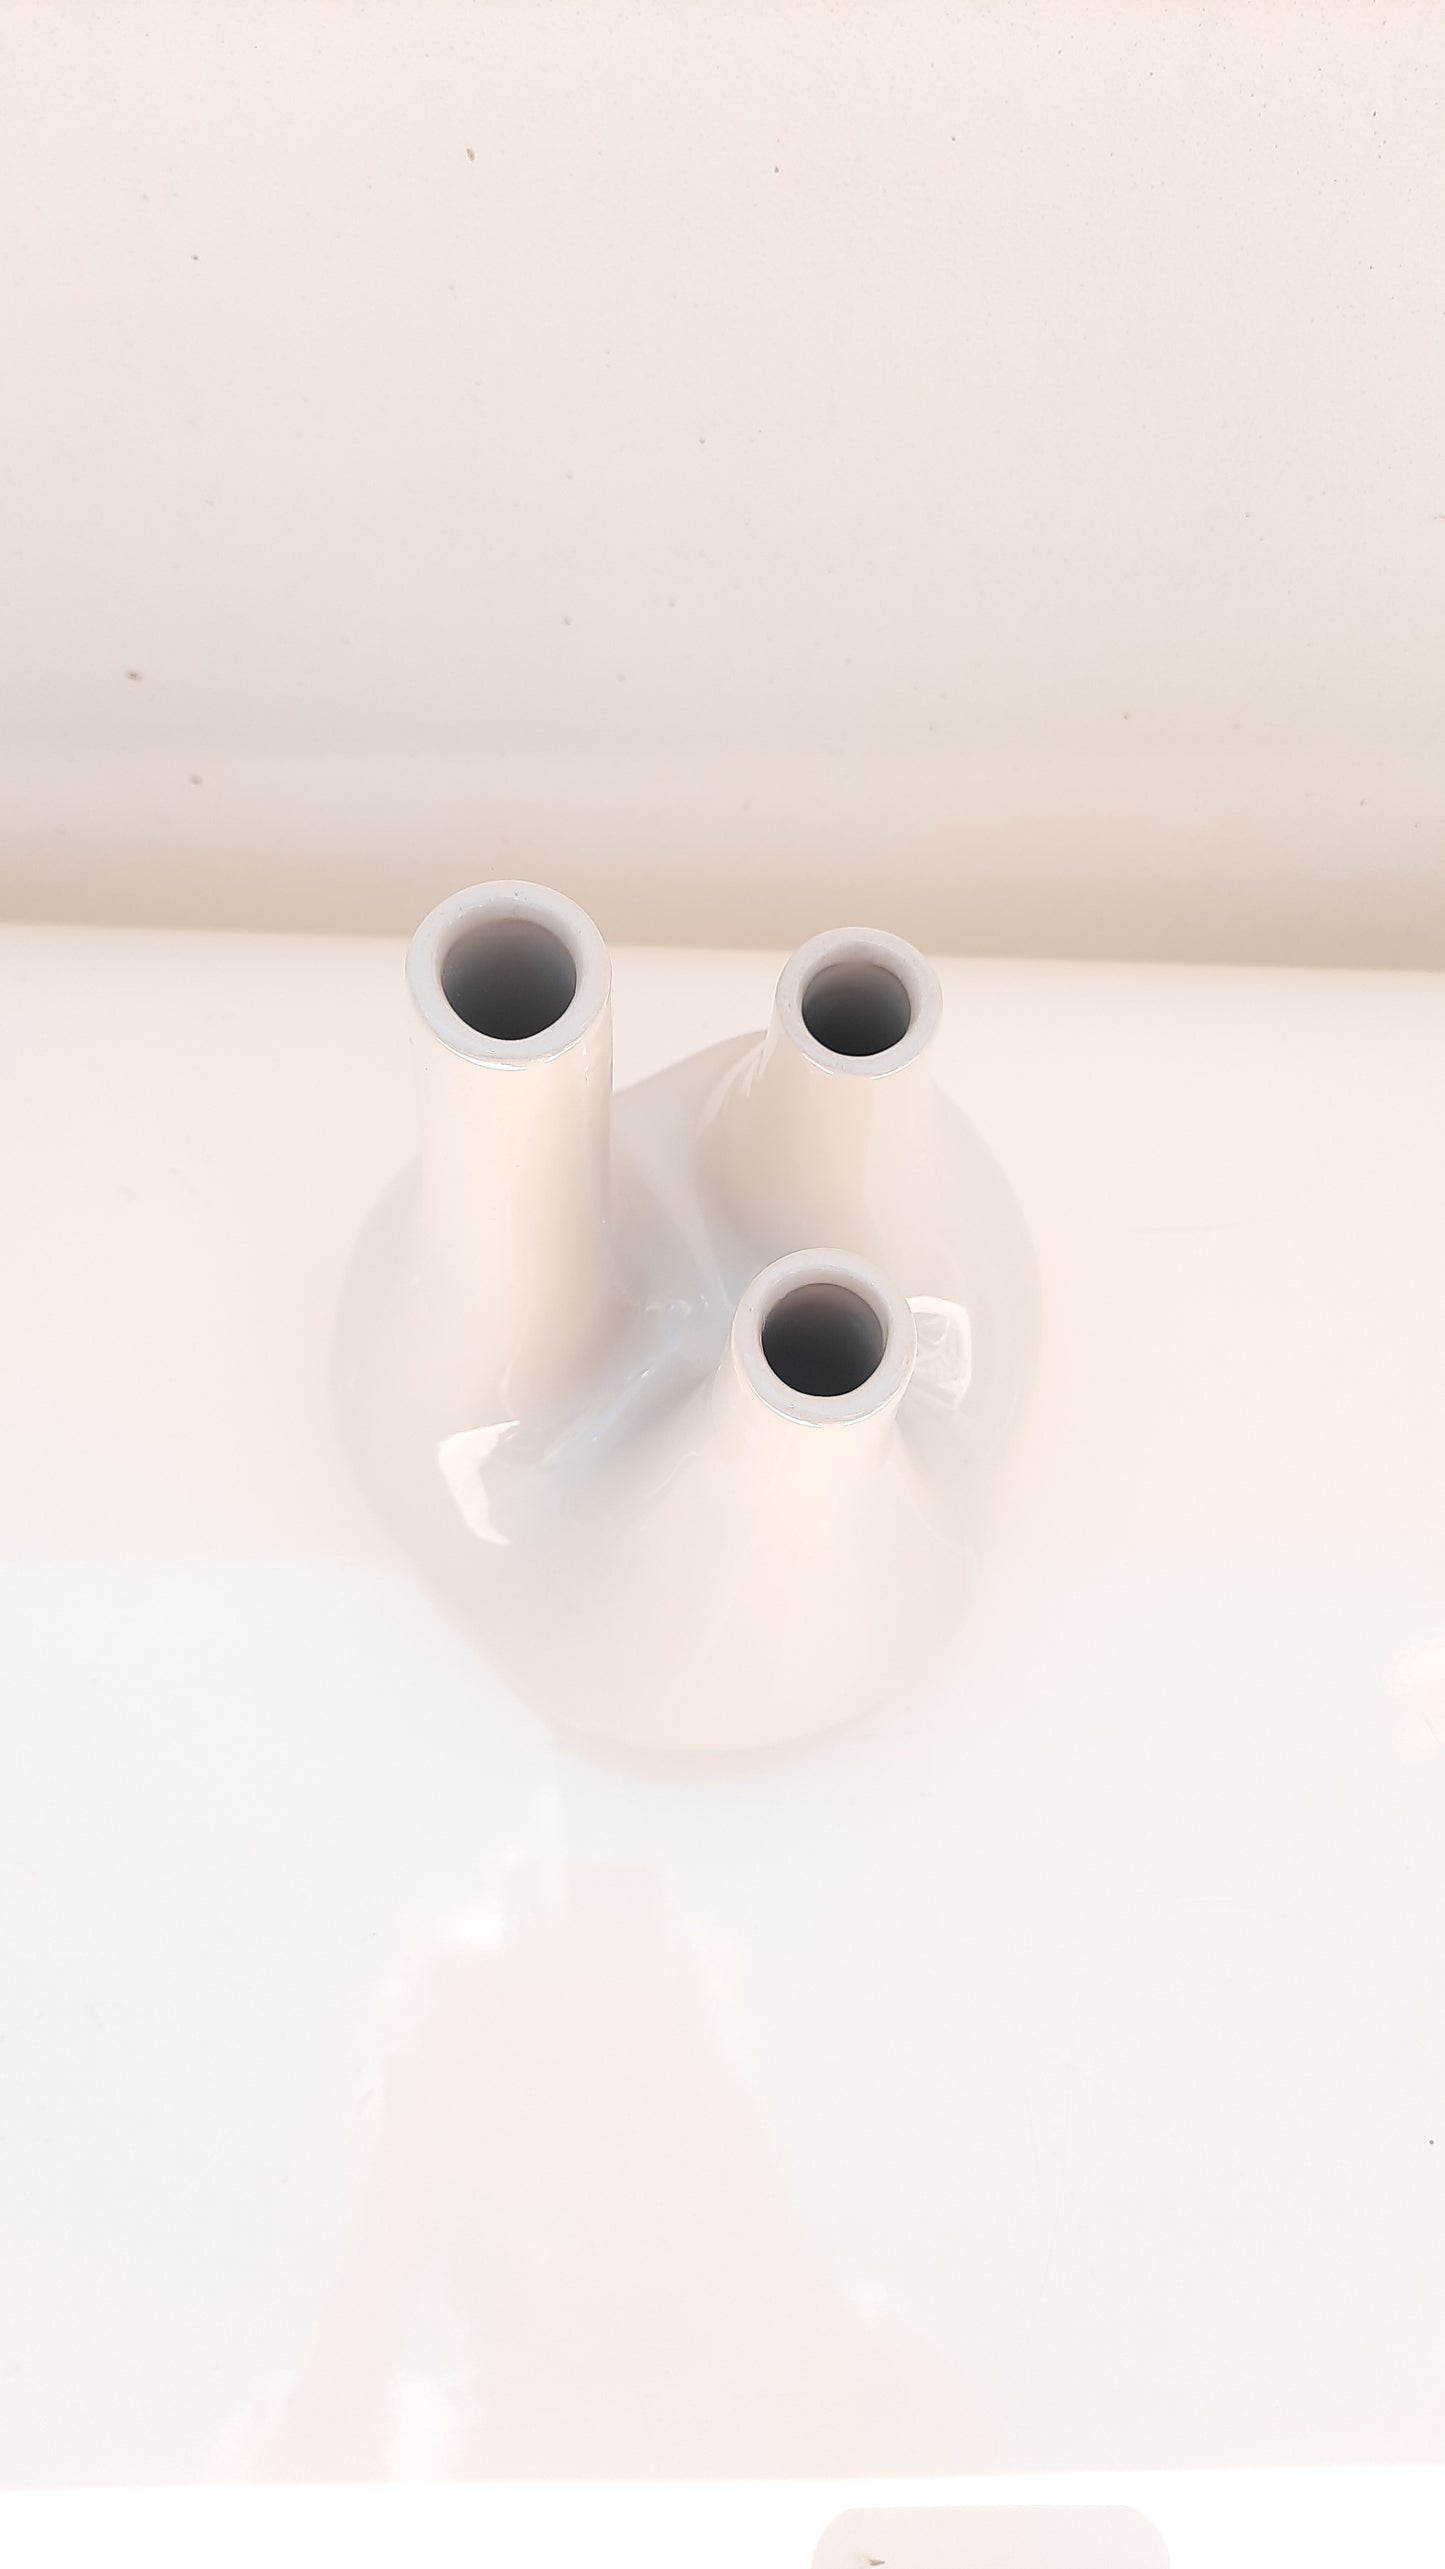 3-Neck Cream Design Vase by Parlane